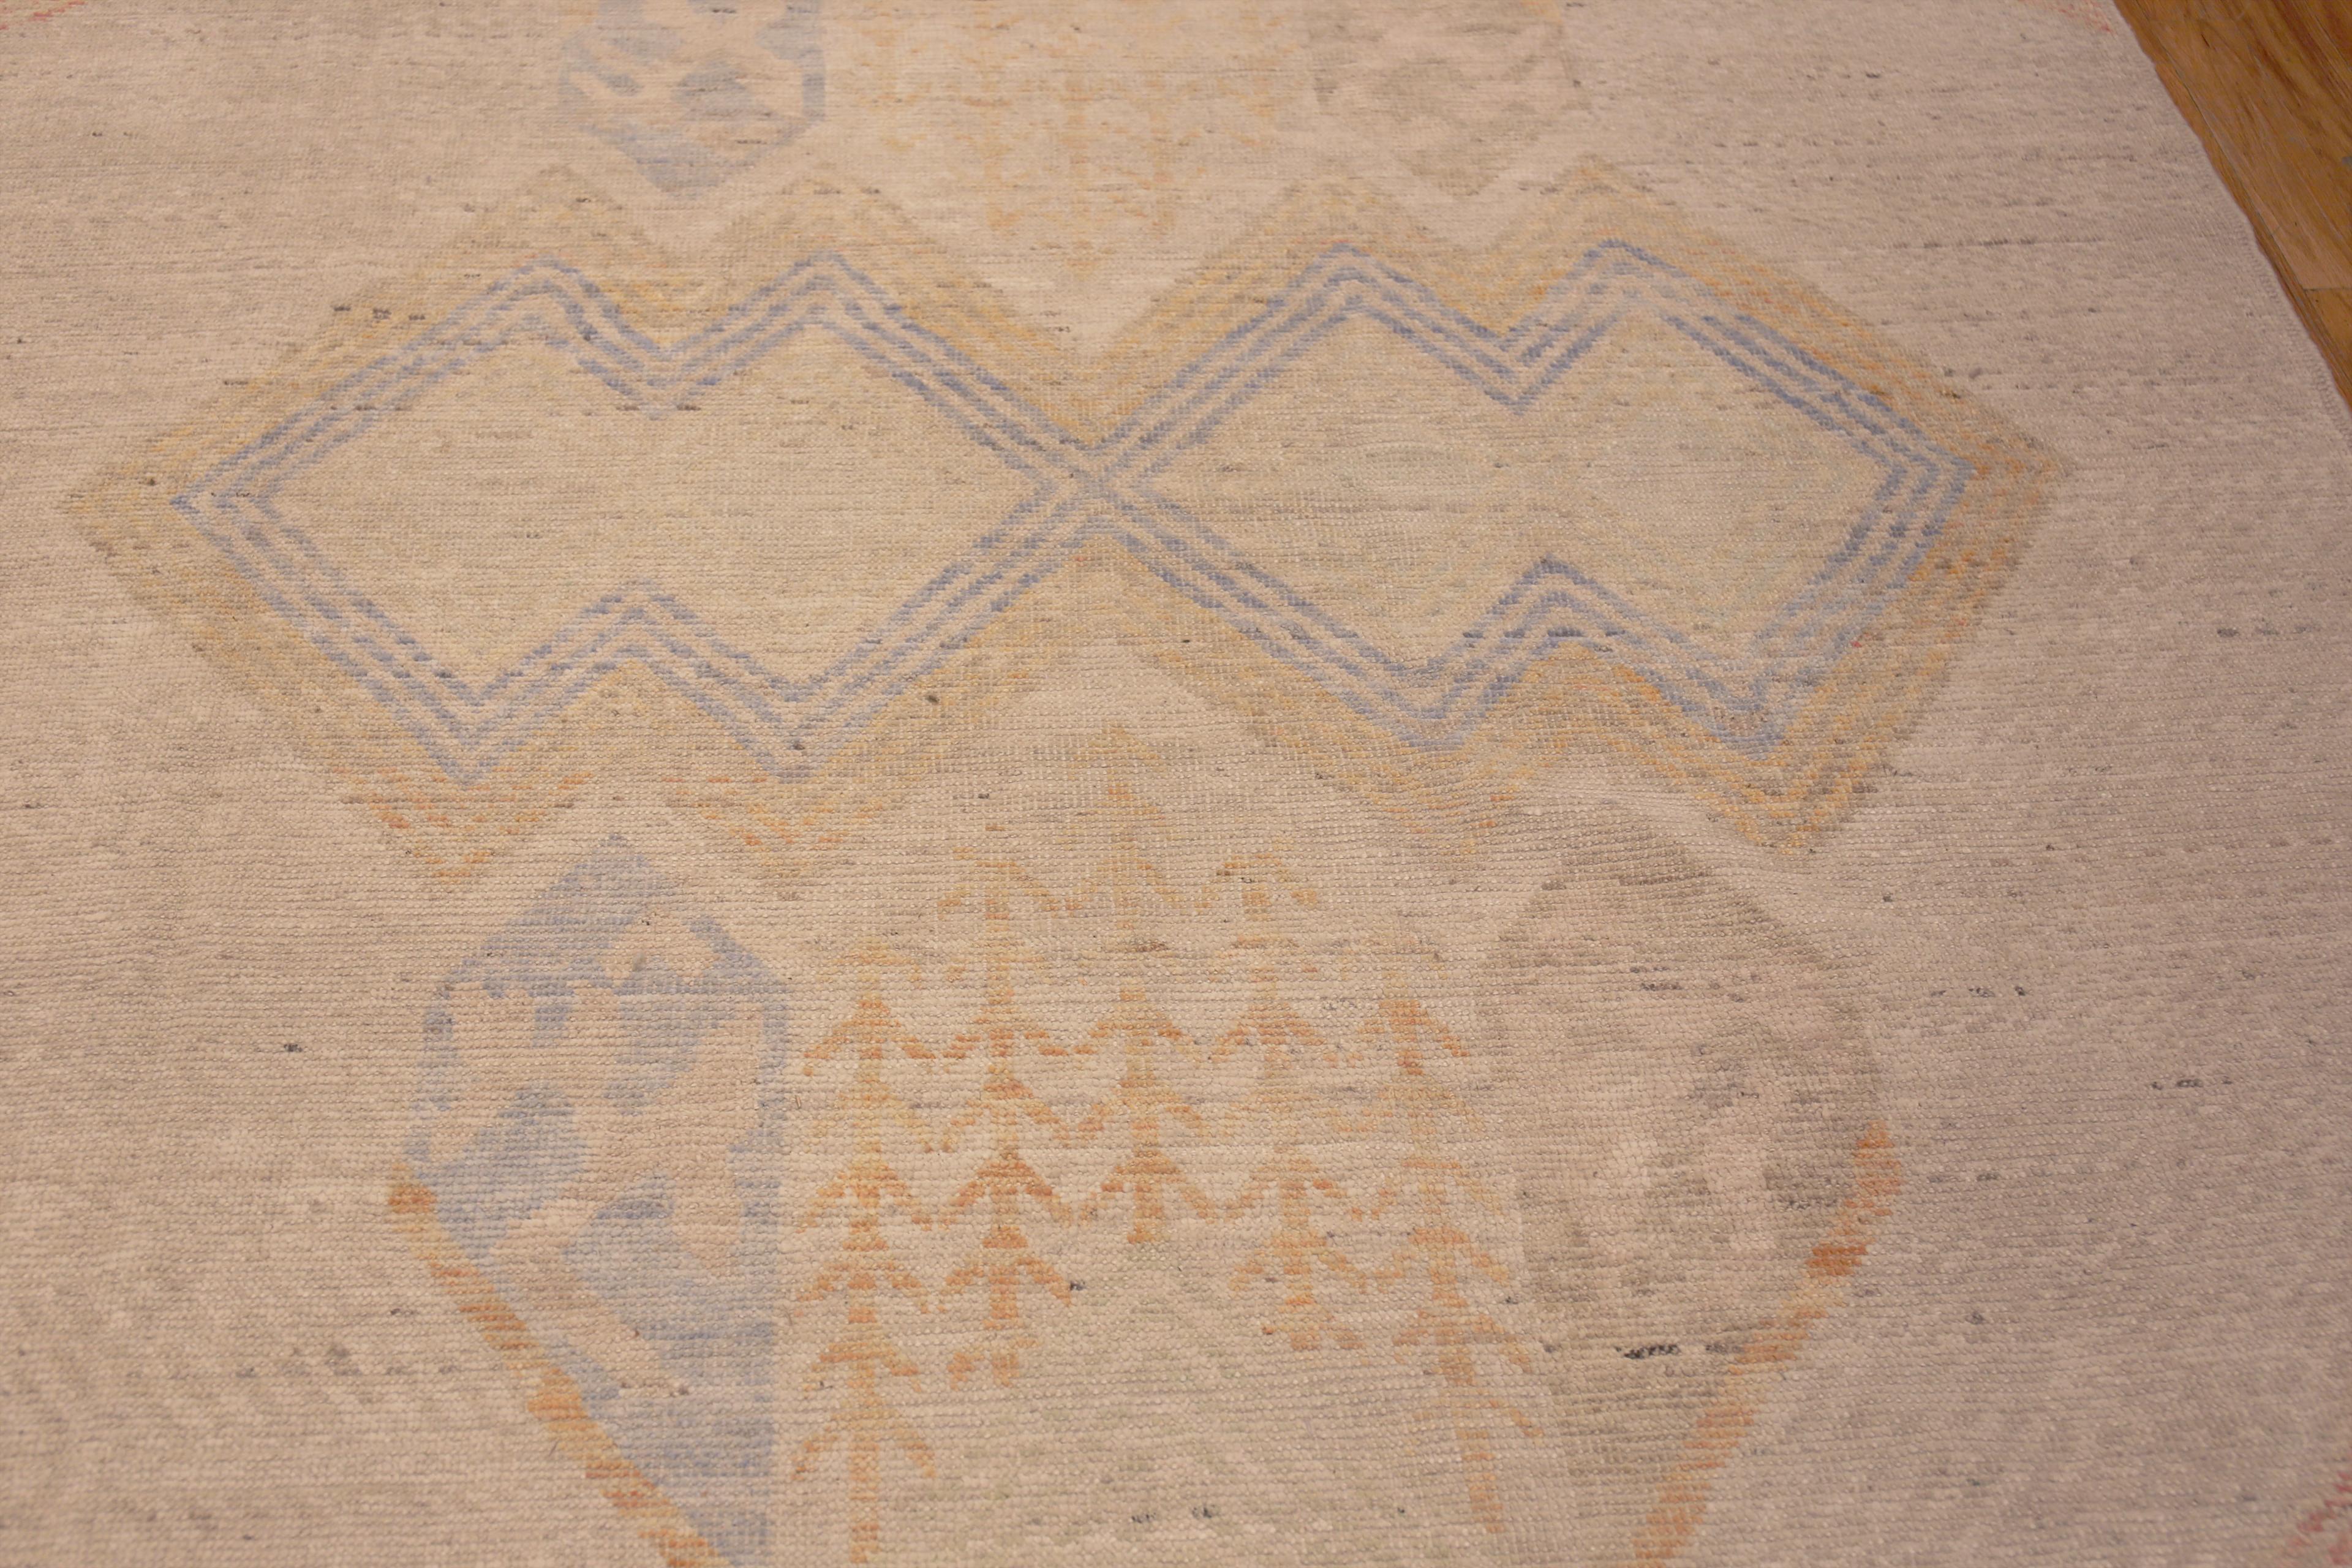 Wool Nazmiyal Collection Rustic Tribal Geometric Design Modern Area Rug 14' x 16'2